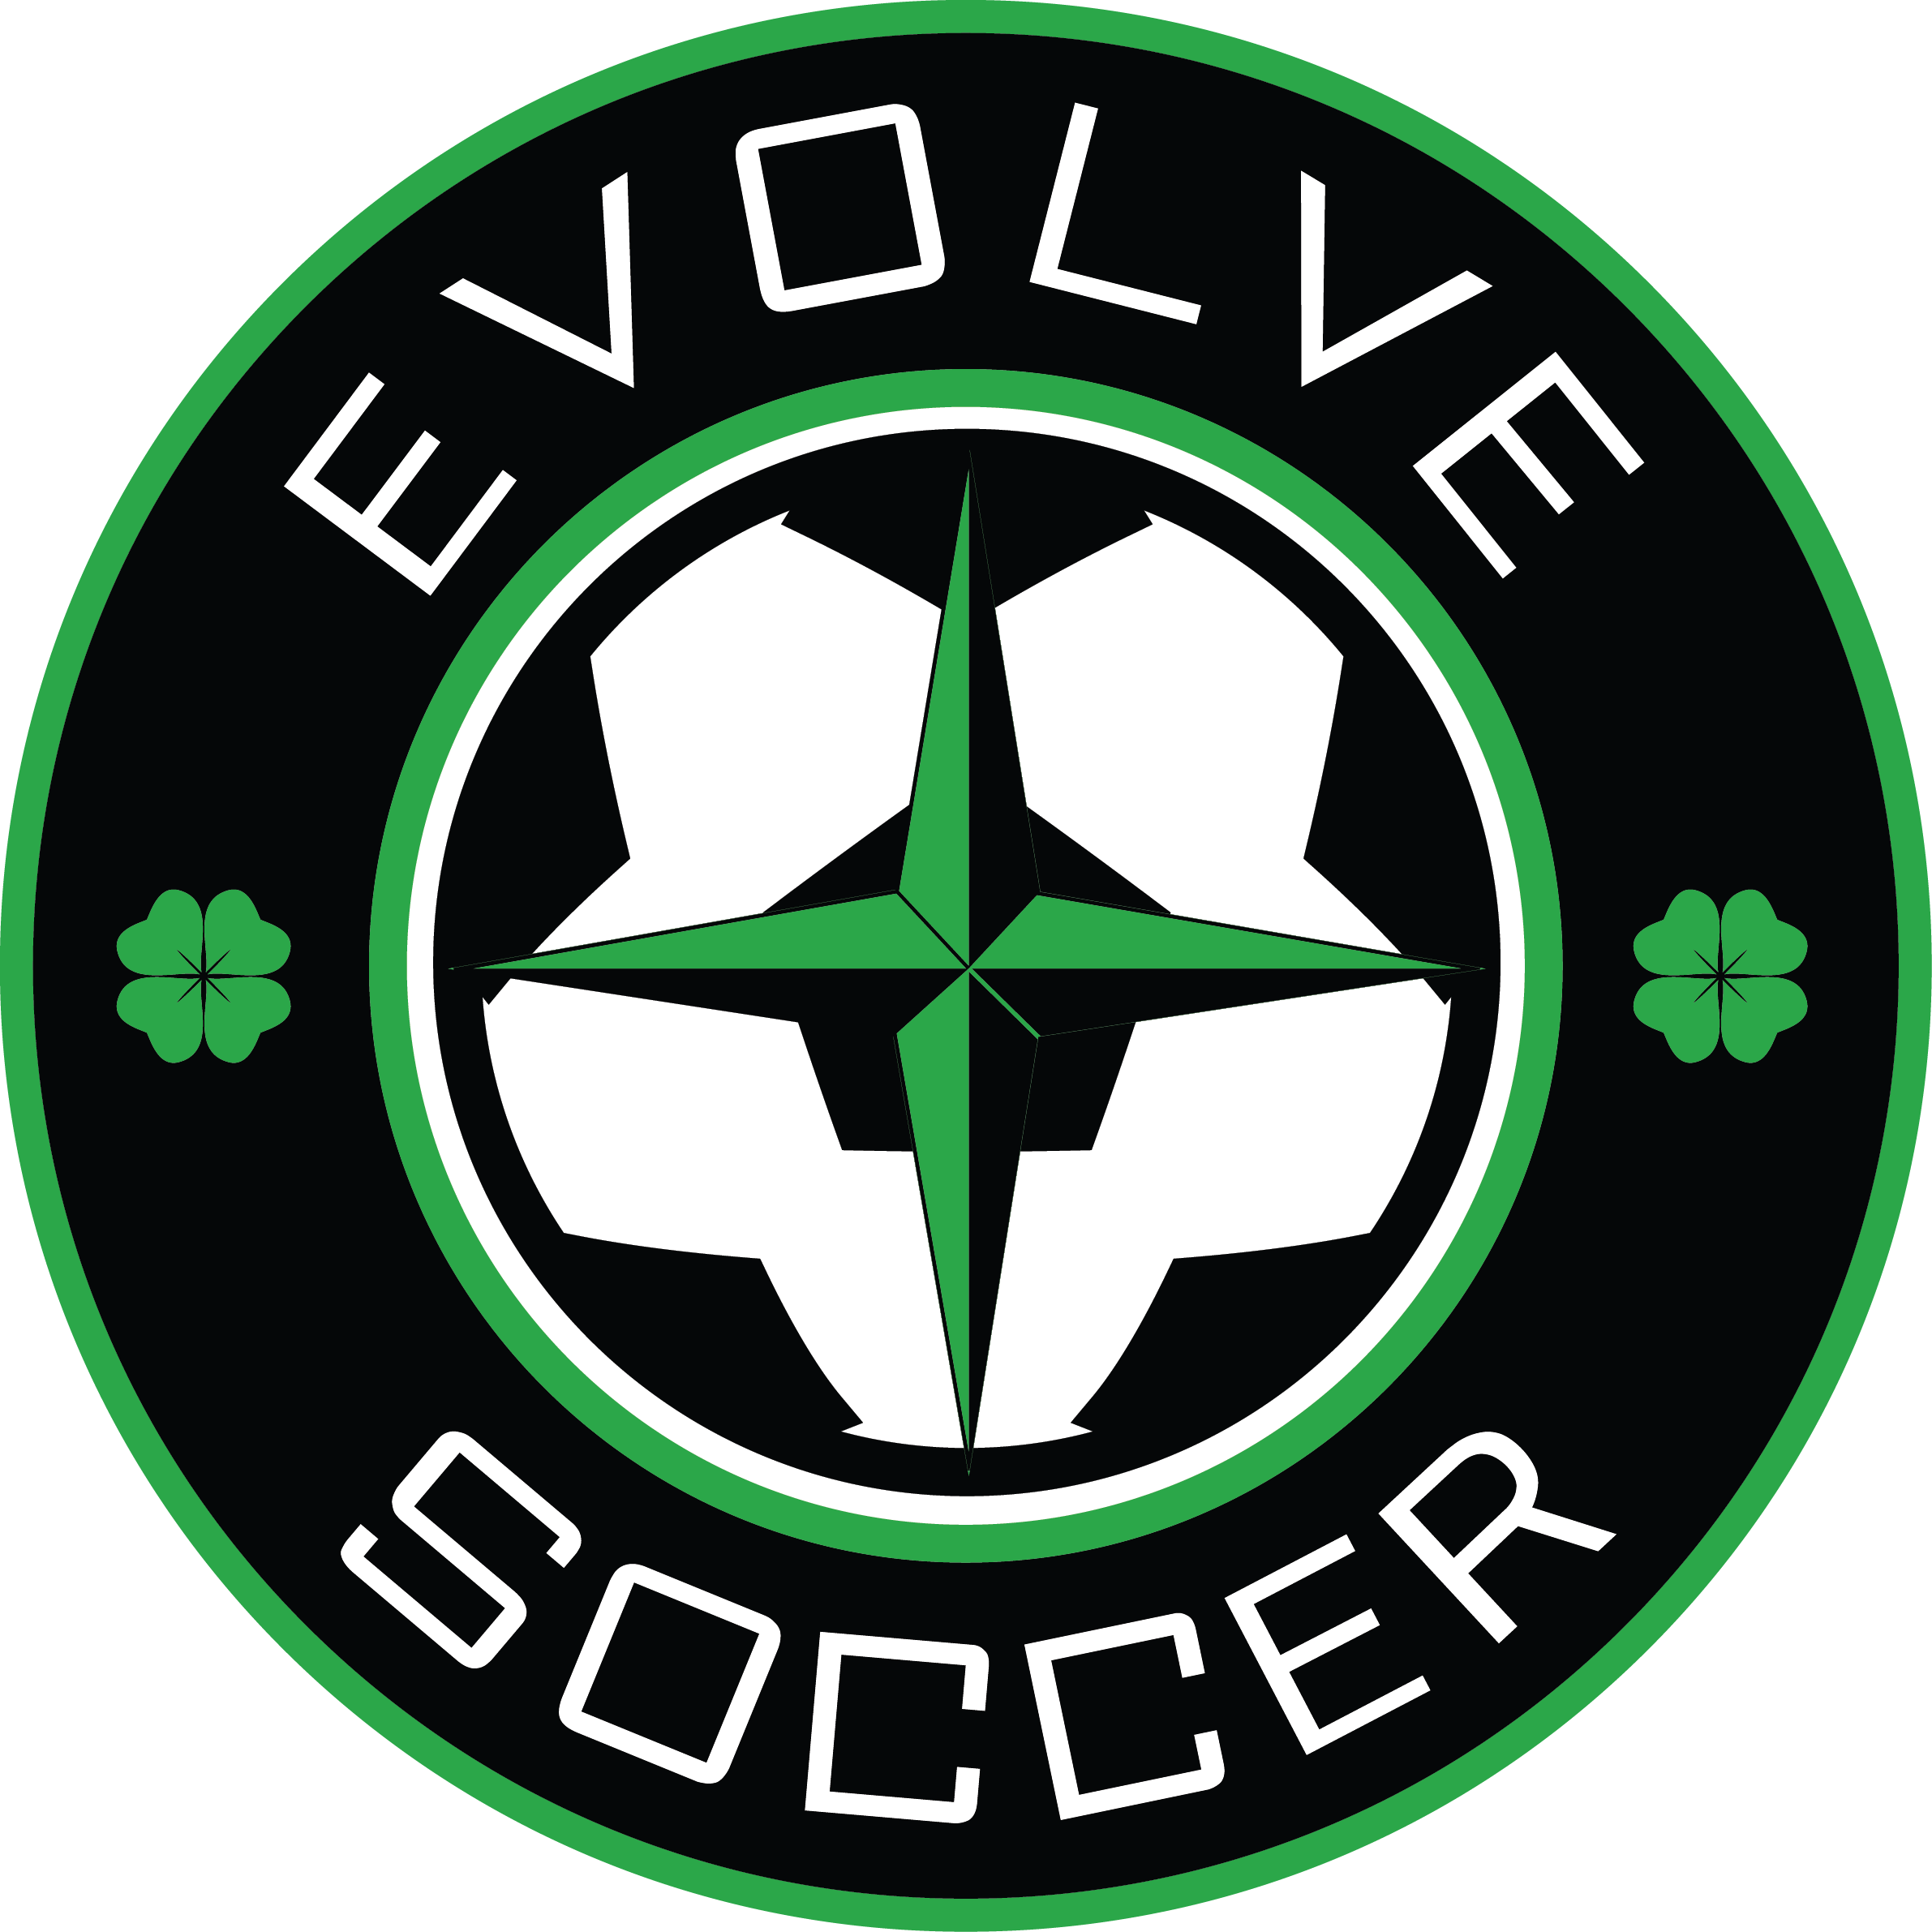 Welcome to EVSA - Evolve Soccer LA